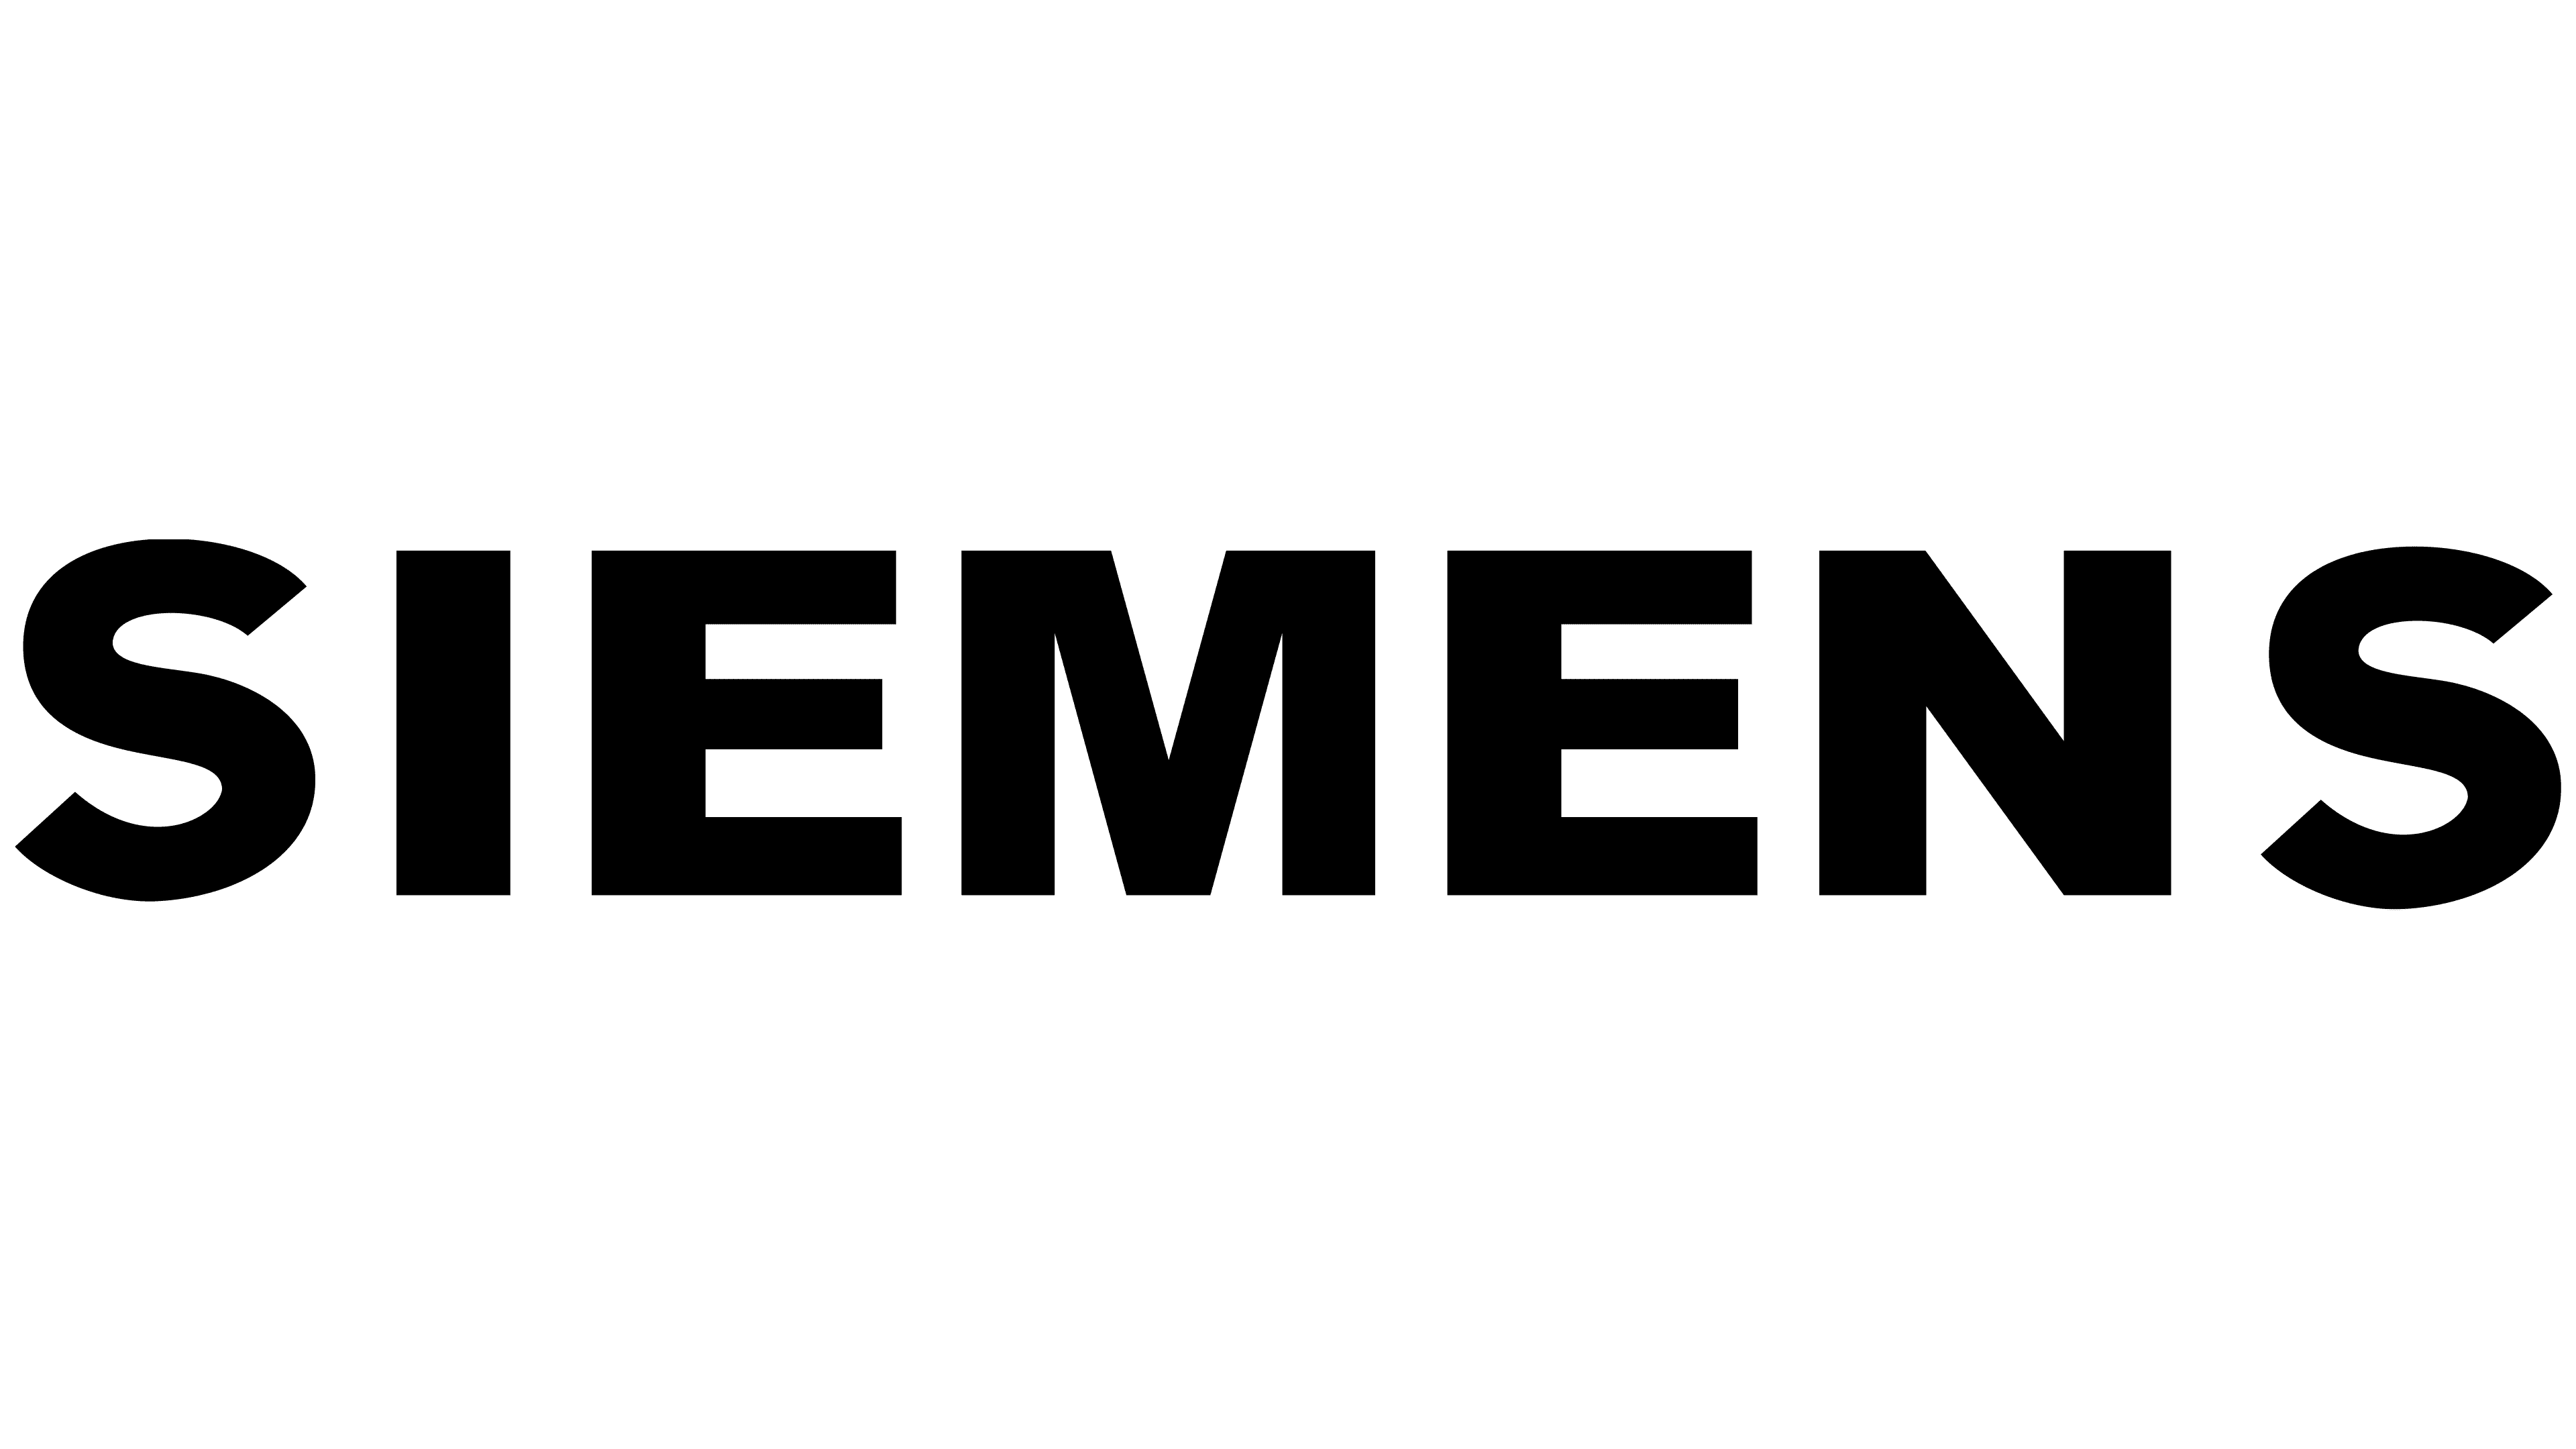 Siemens-Logo-19361